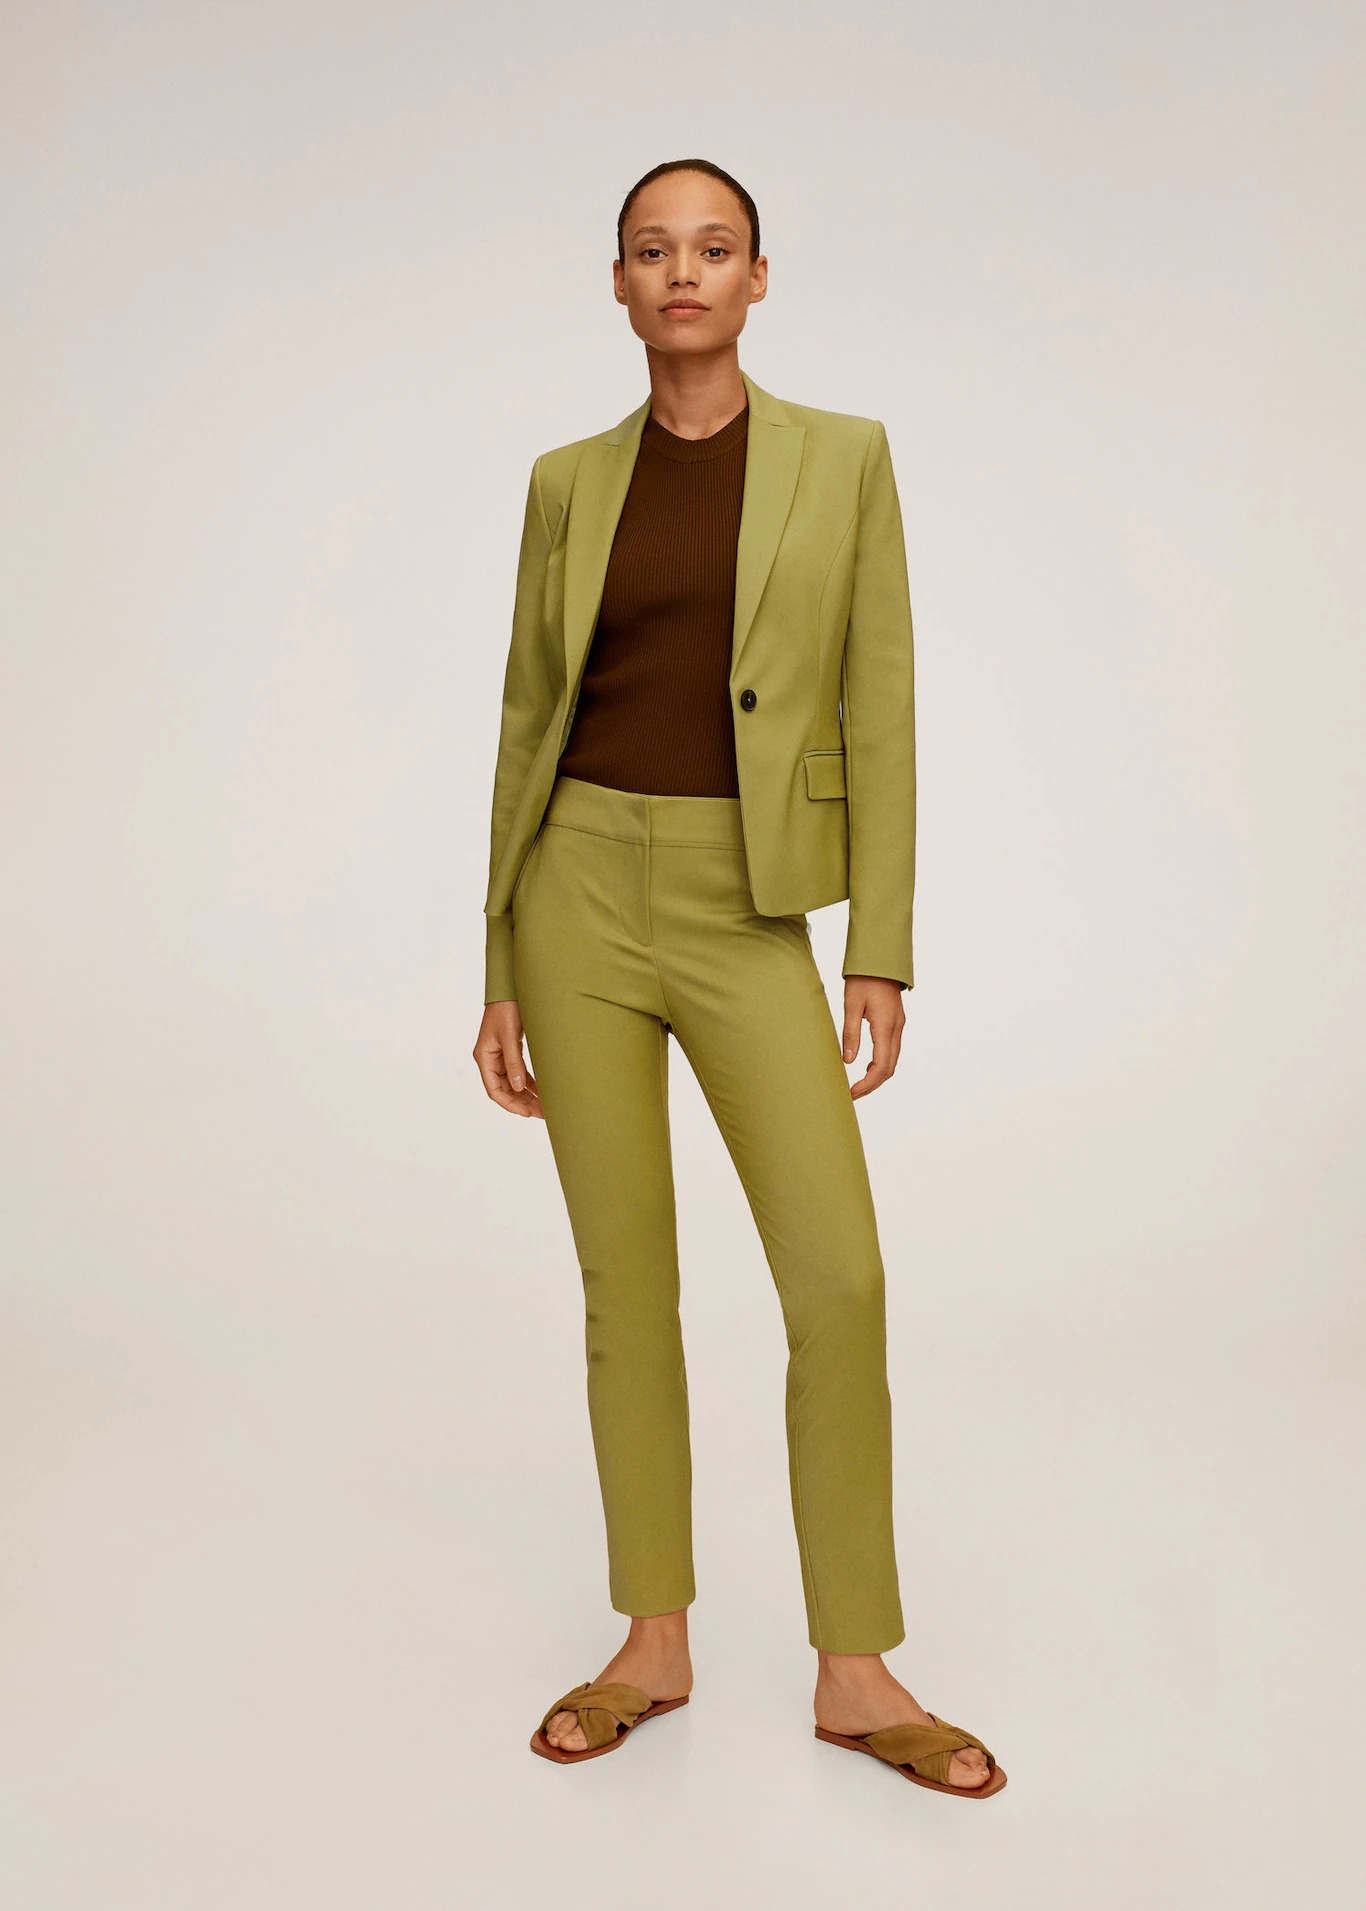 Mango 77092888 Structured suit blazer Olive green size 38(EU)1